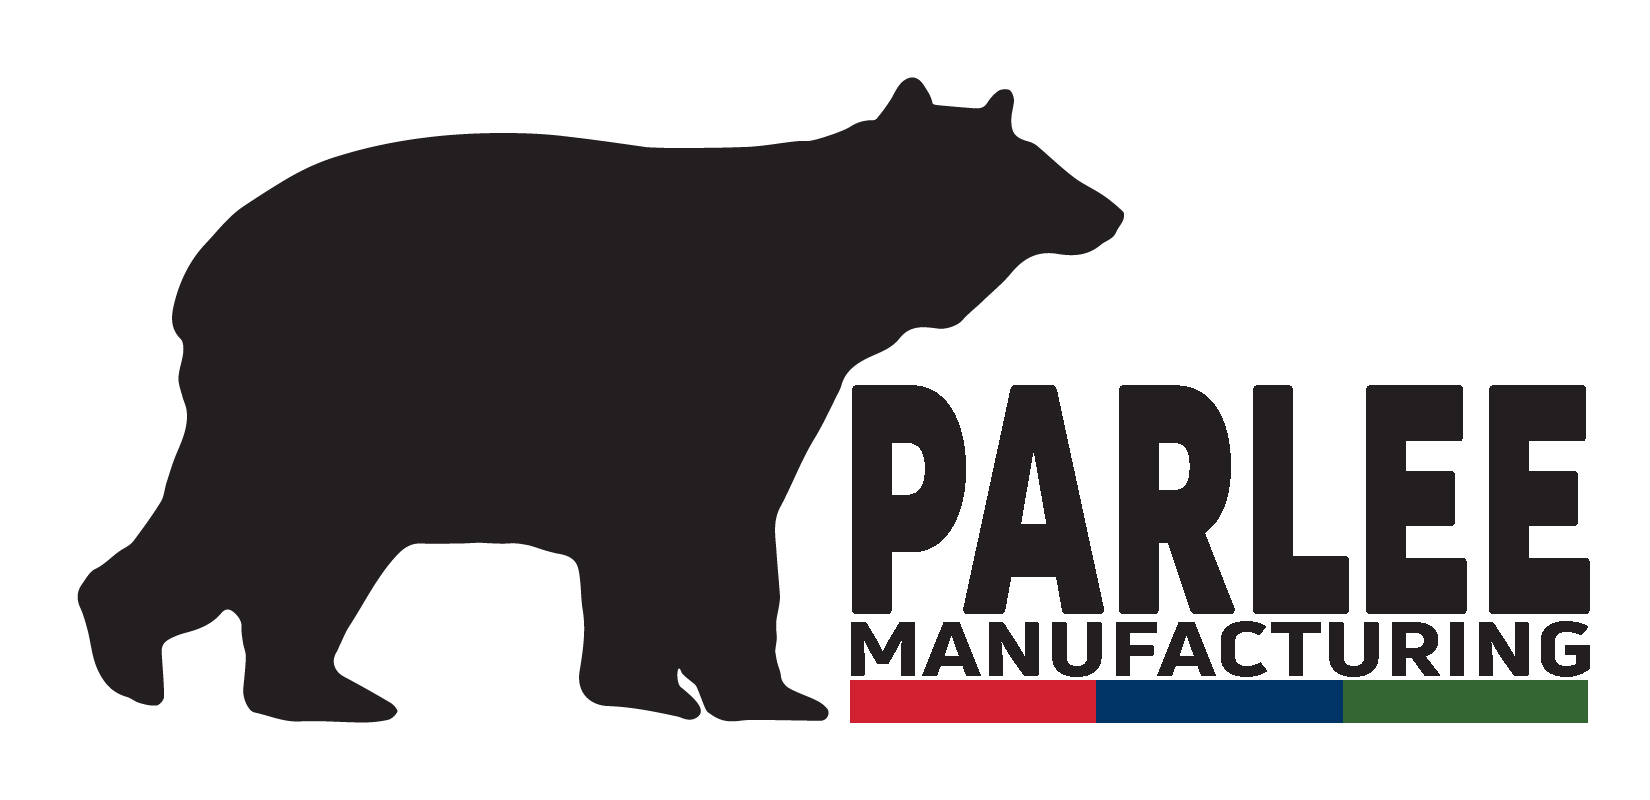 Parlee Manufacturing Company Ltd.Logo